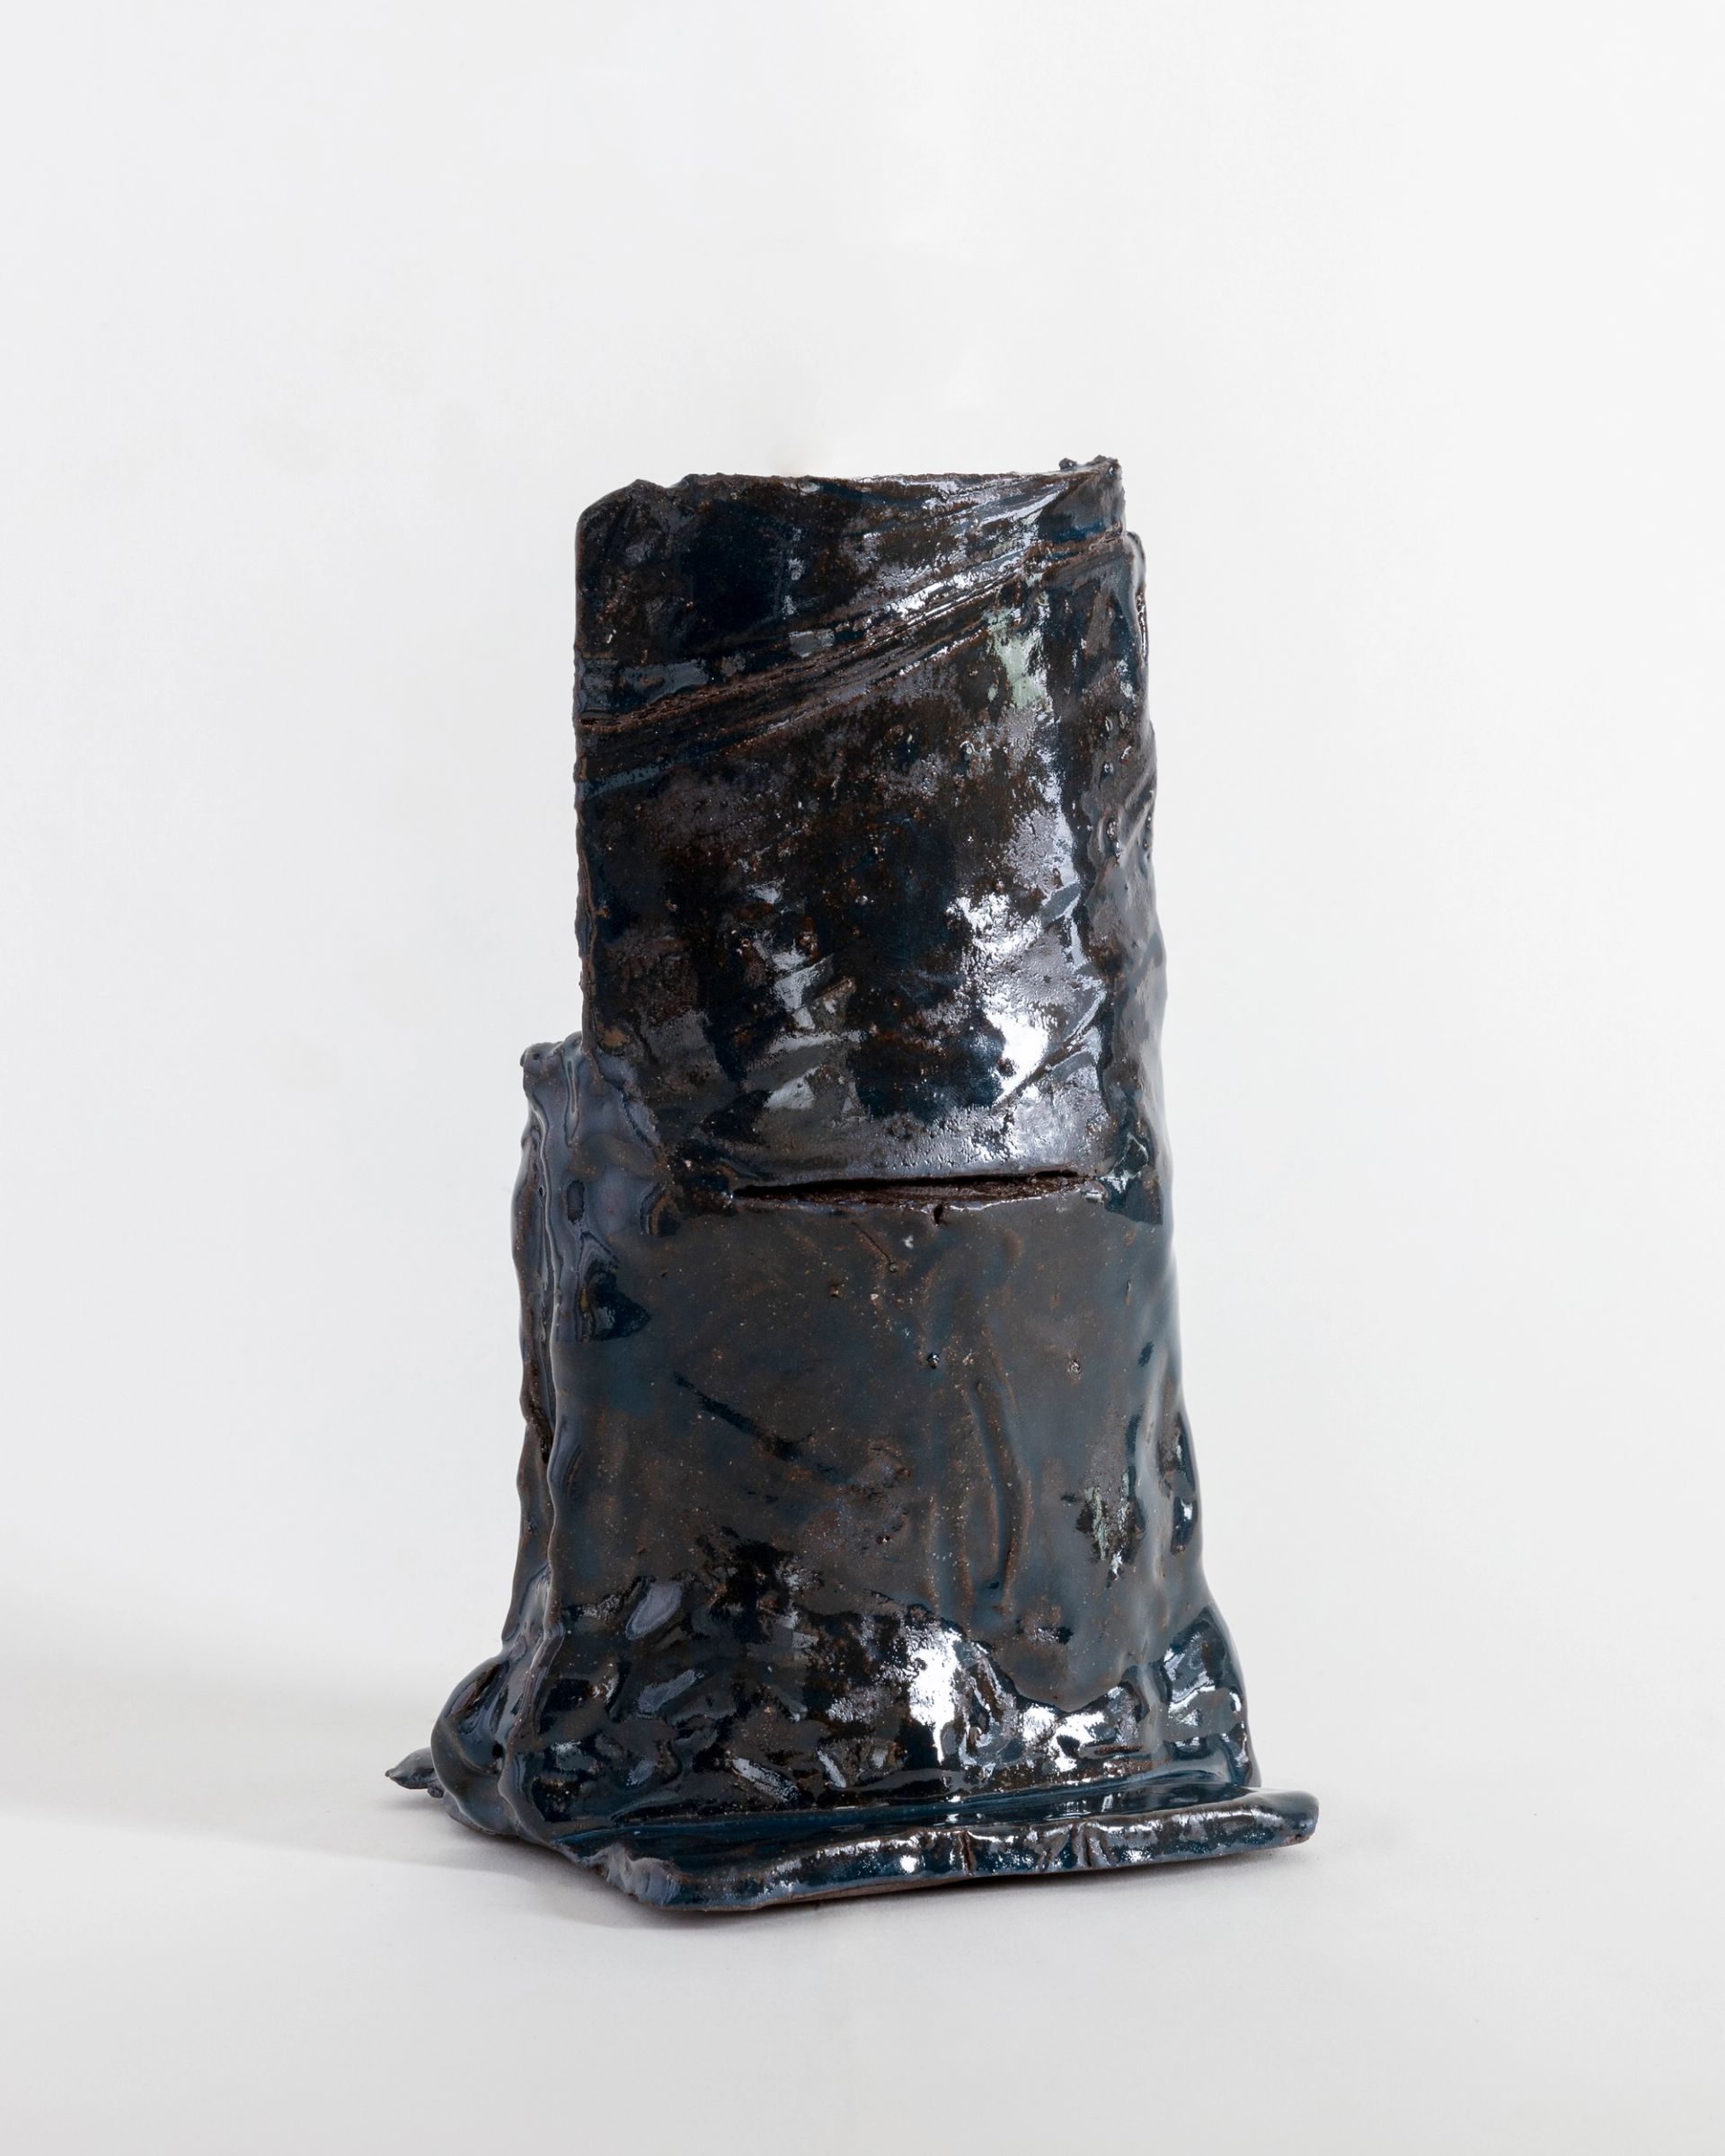 Untitled, 2018, glazed ceramic, 24 × 12.5 × 14.5 cm